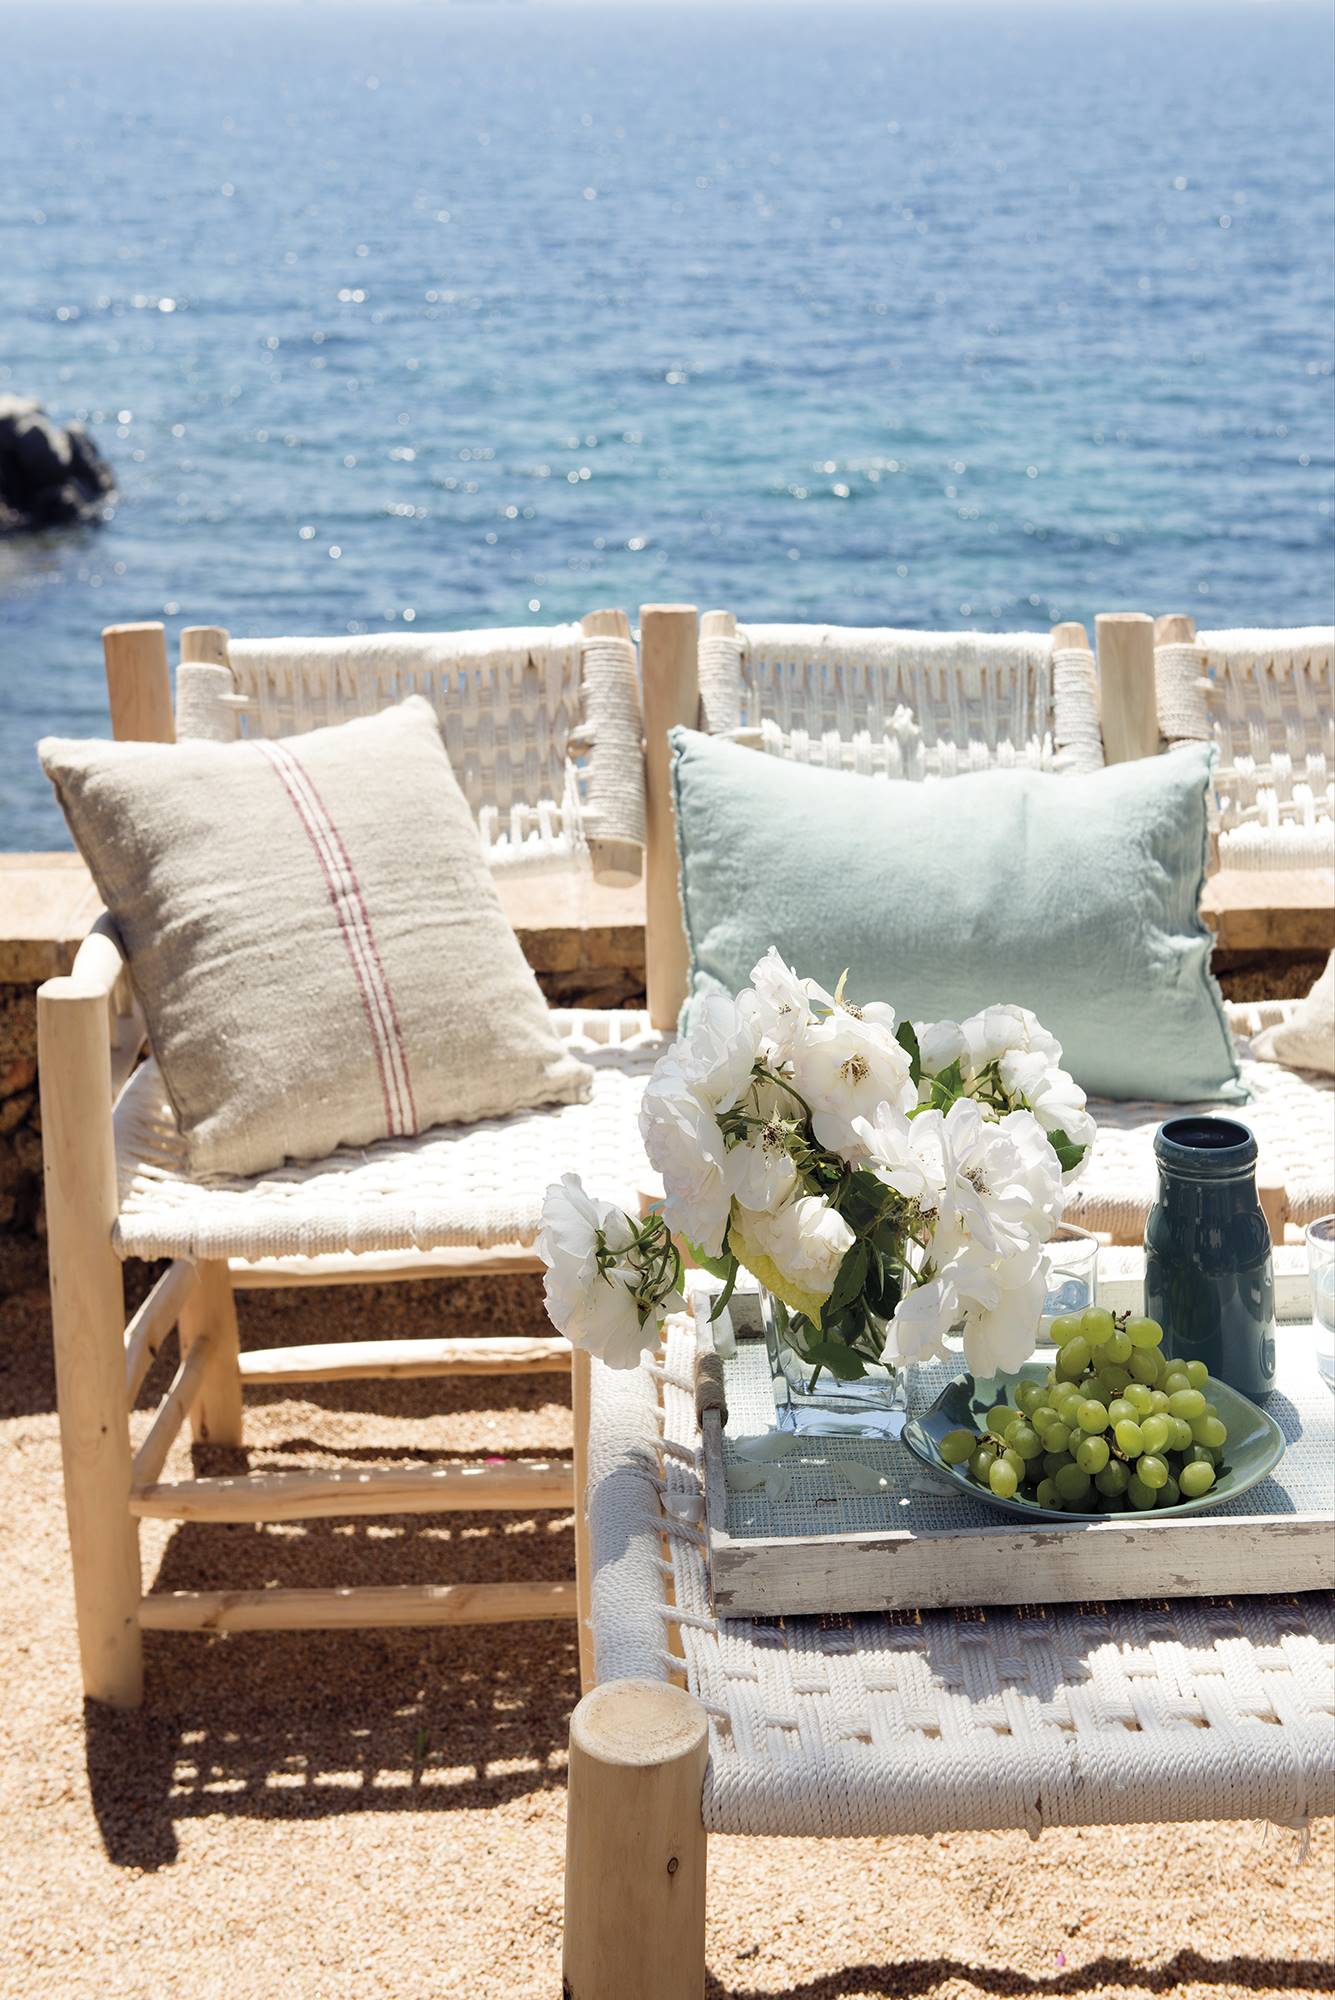 vida marina paquete de 4 fundas de almohada decorativas mediterráneas para jardín playa decoración del hogar 45 x 45 cm JOTOM Fundas de cojín impermeables para exteriores para sofá patio 